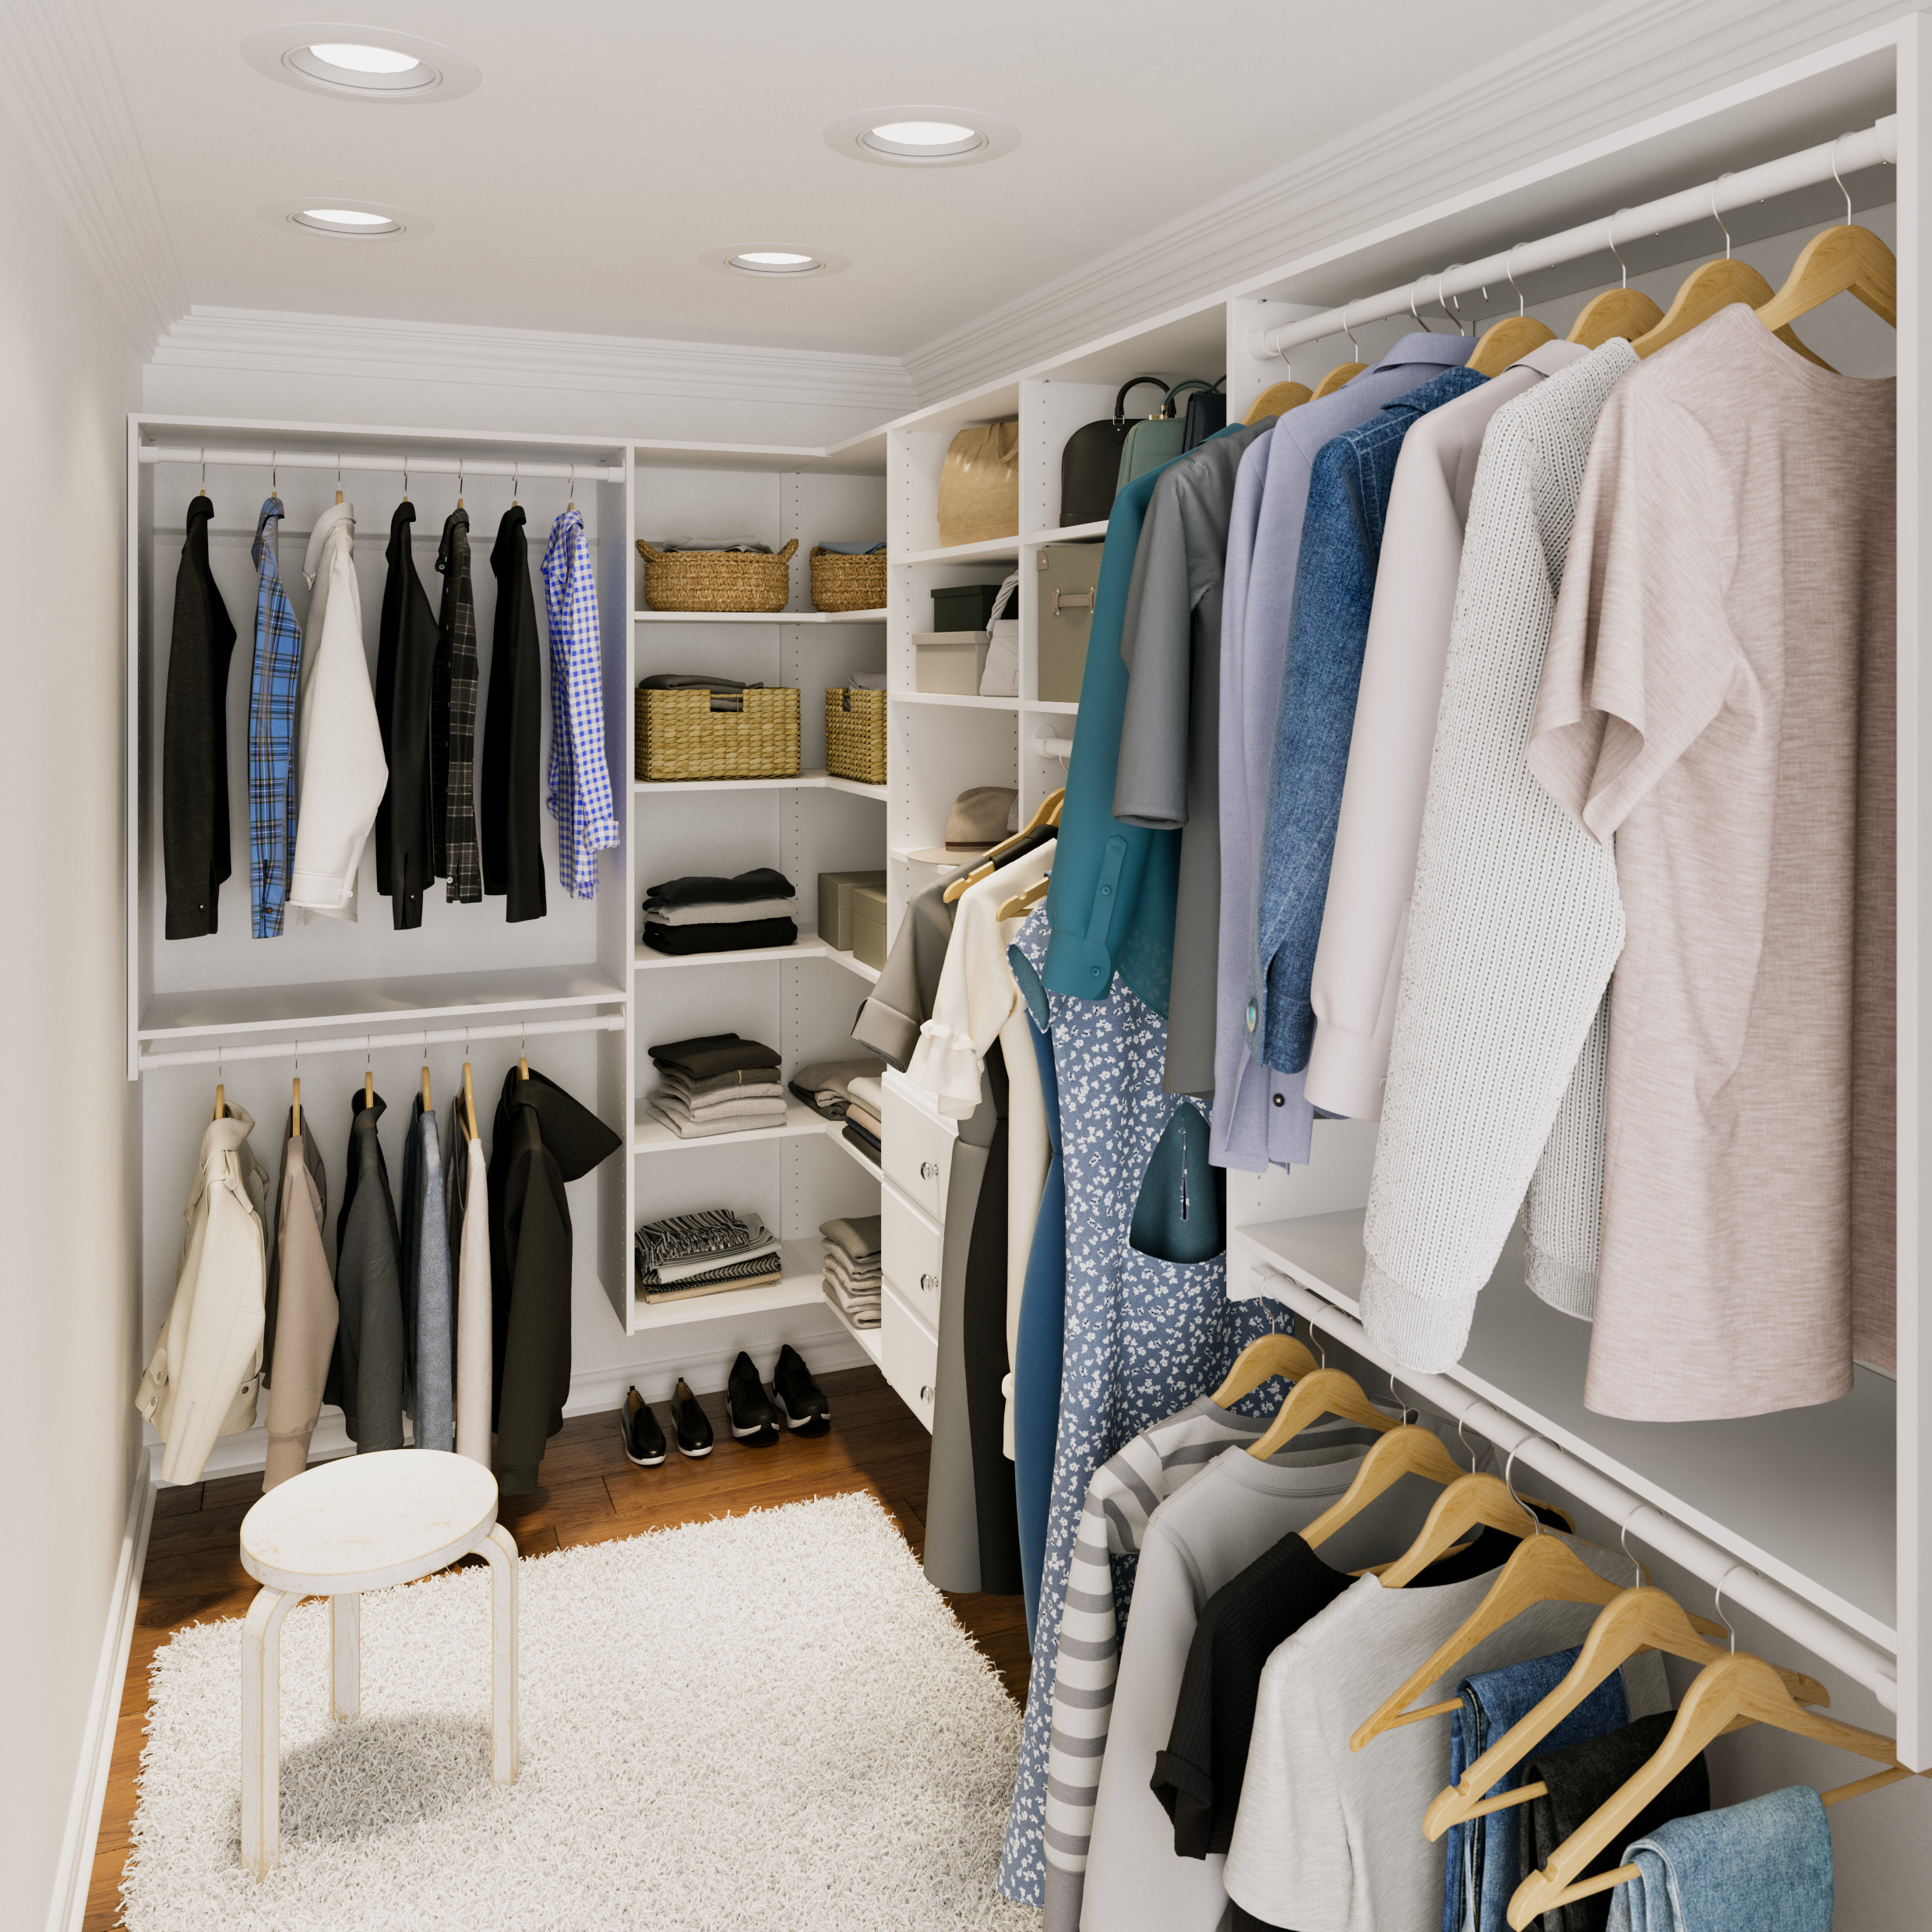 StorageWorks Hanging Closet Organizer, 3-Shelf Hanging Closet Shelves with Top Shelf, 12W x 12D x 31H, Extra-Large Space, Gray